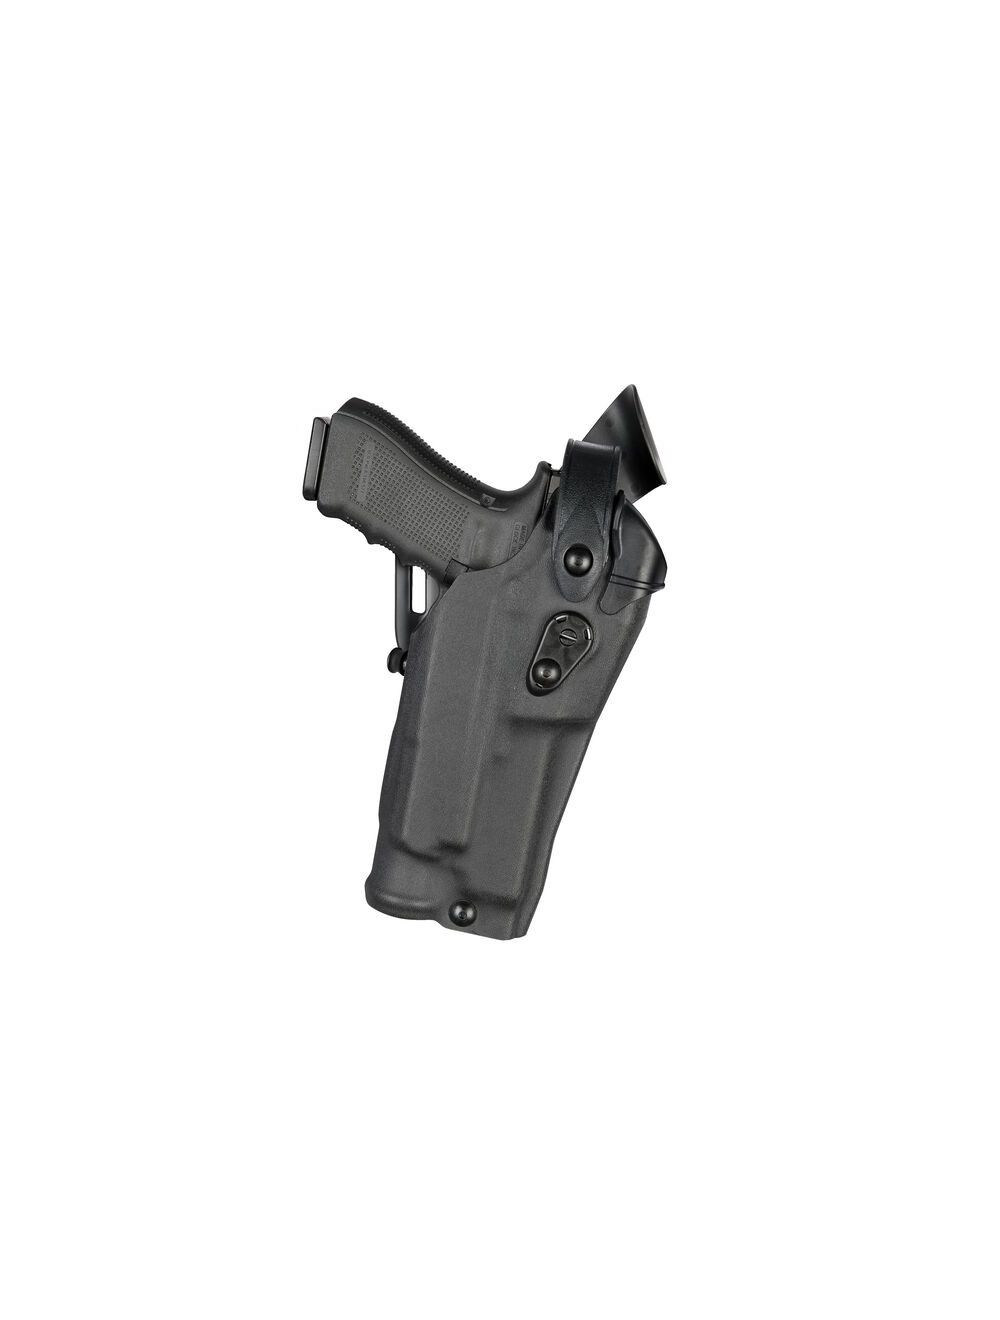 Model 6360RDS ALS/SLS Mid-Ride, Level III Retention Duty Holster for Glock 47 w/ Light